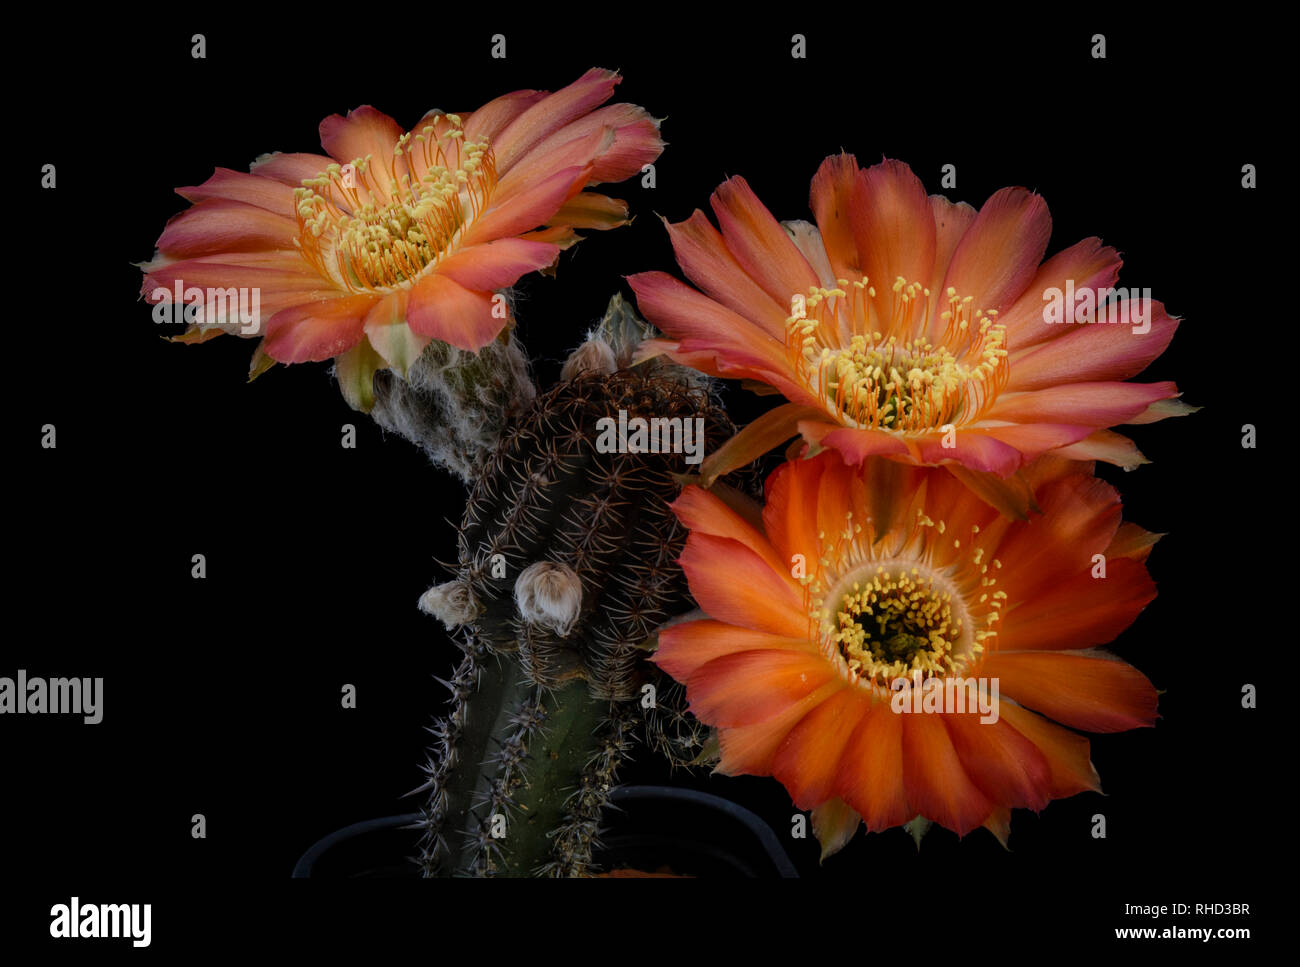 Cactus Lobivia Amblayensis with flower isolated on Black Stock Photo